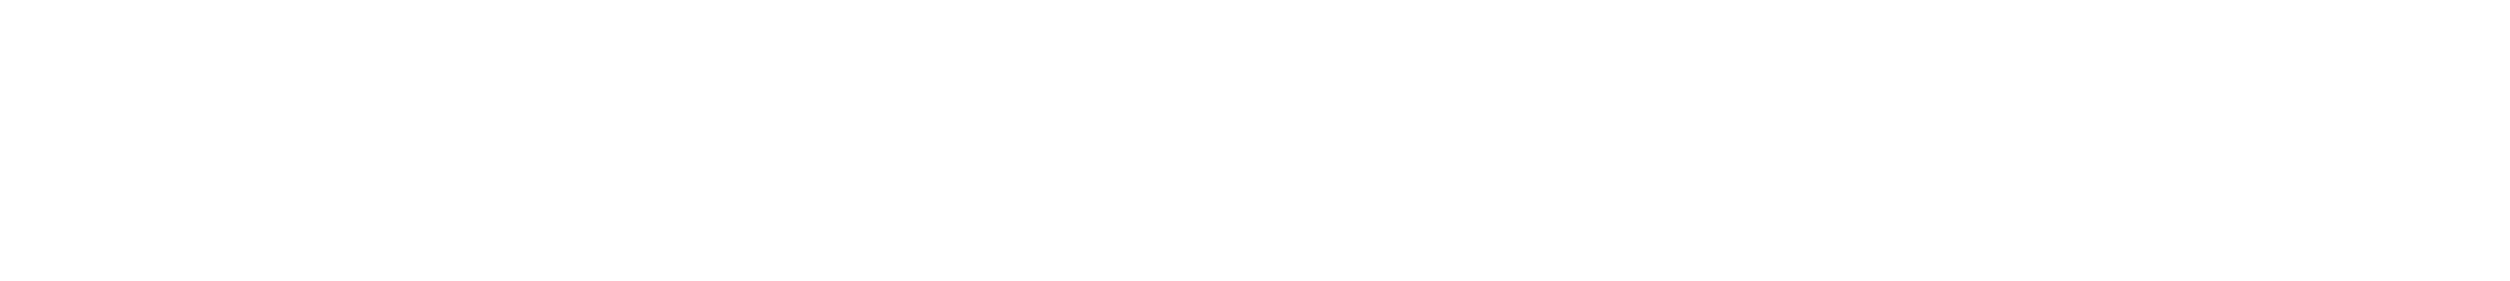 excyformal logo